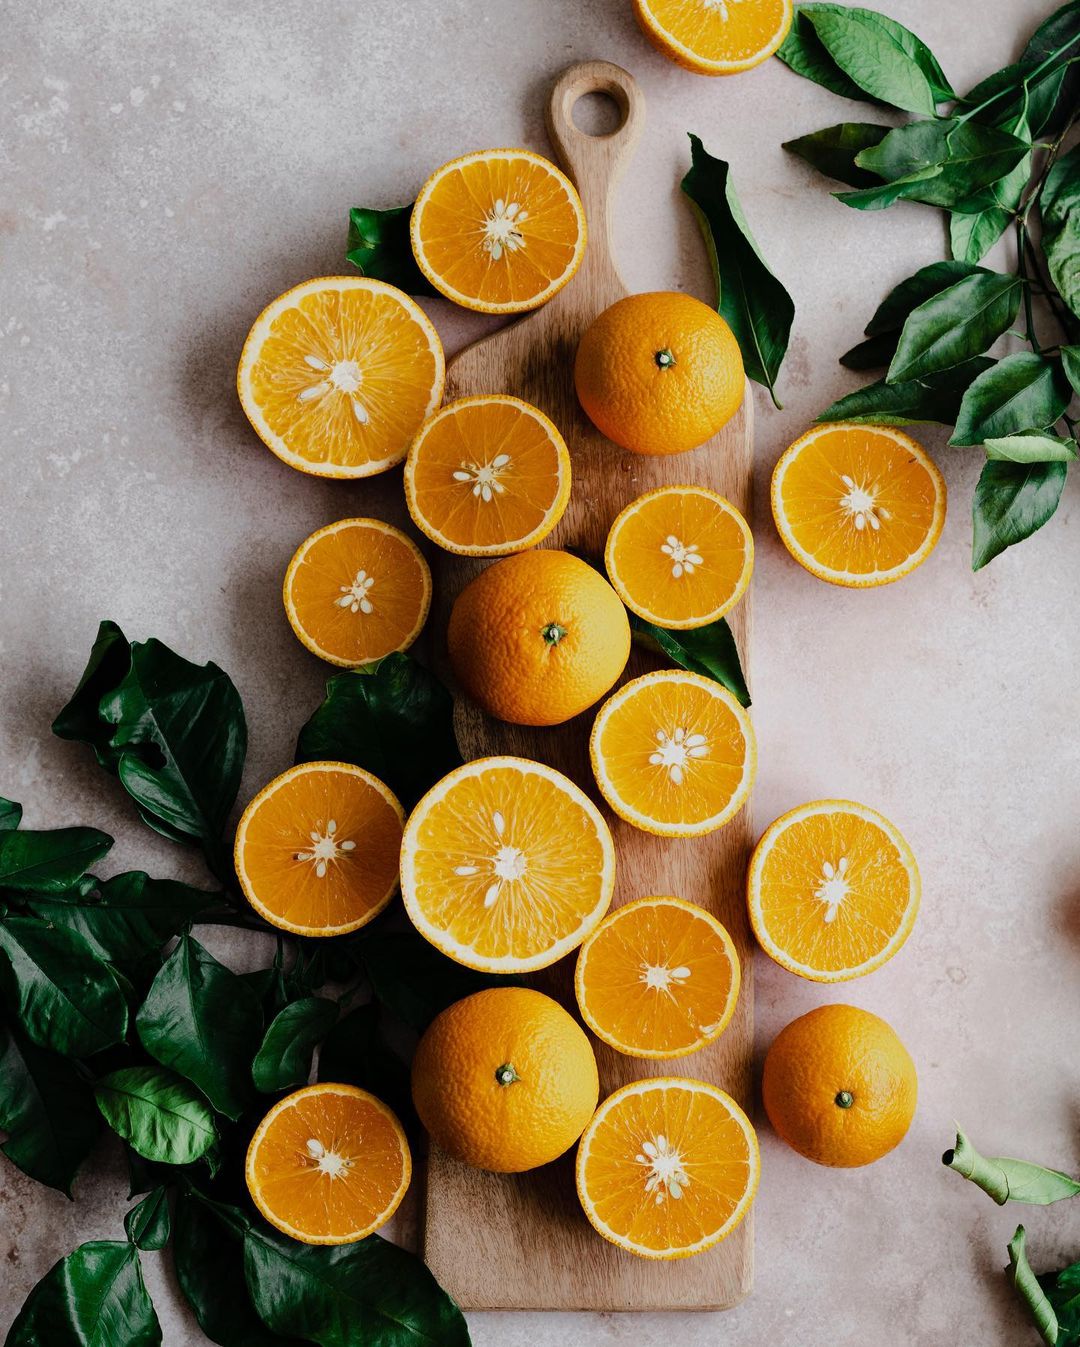 REVO830 citrus juicer